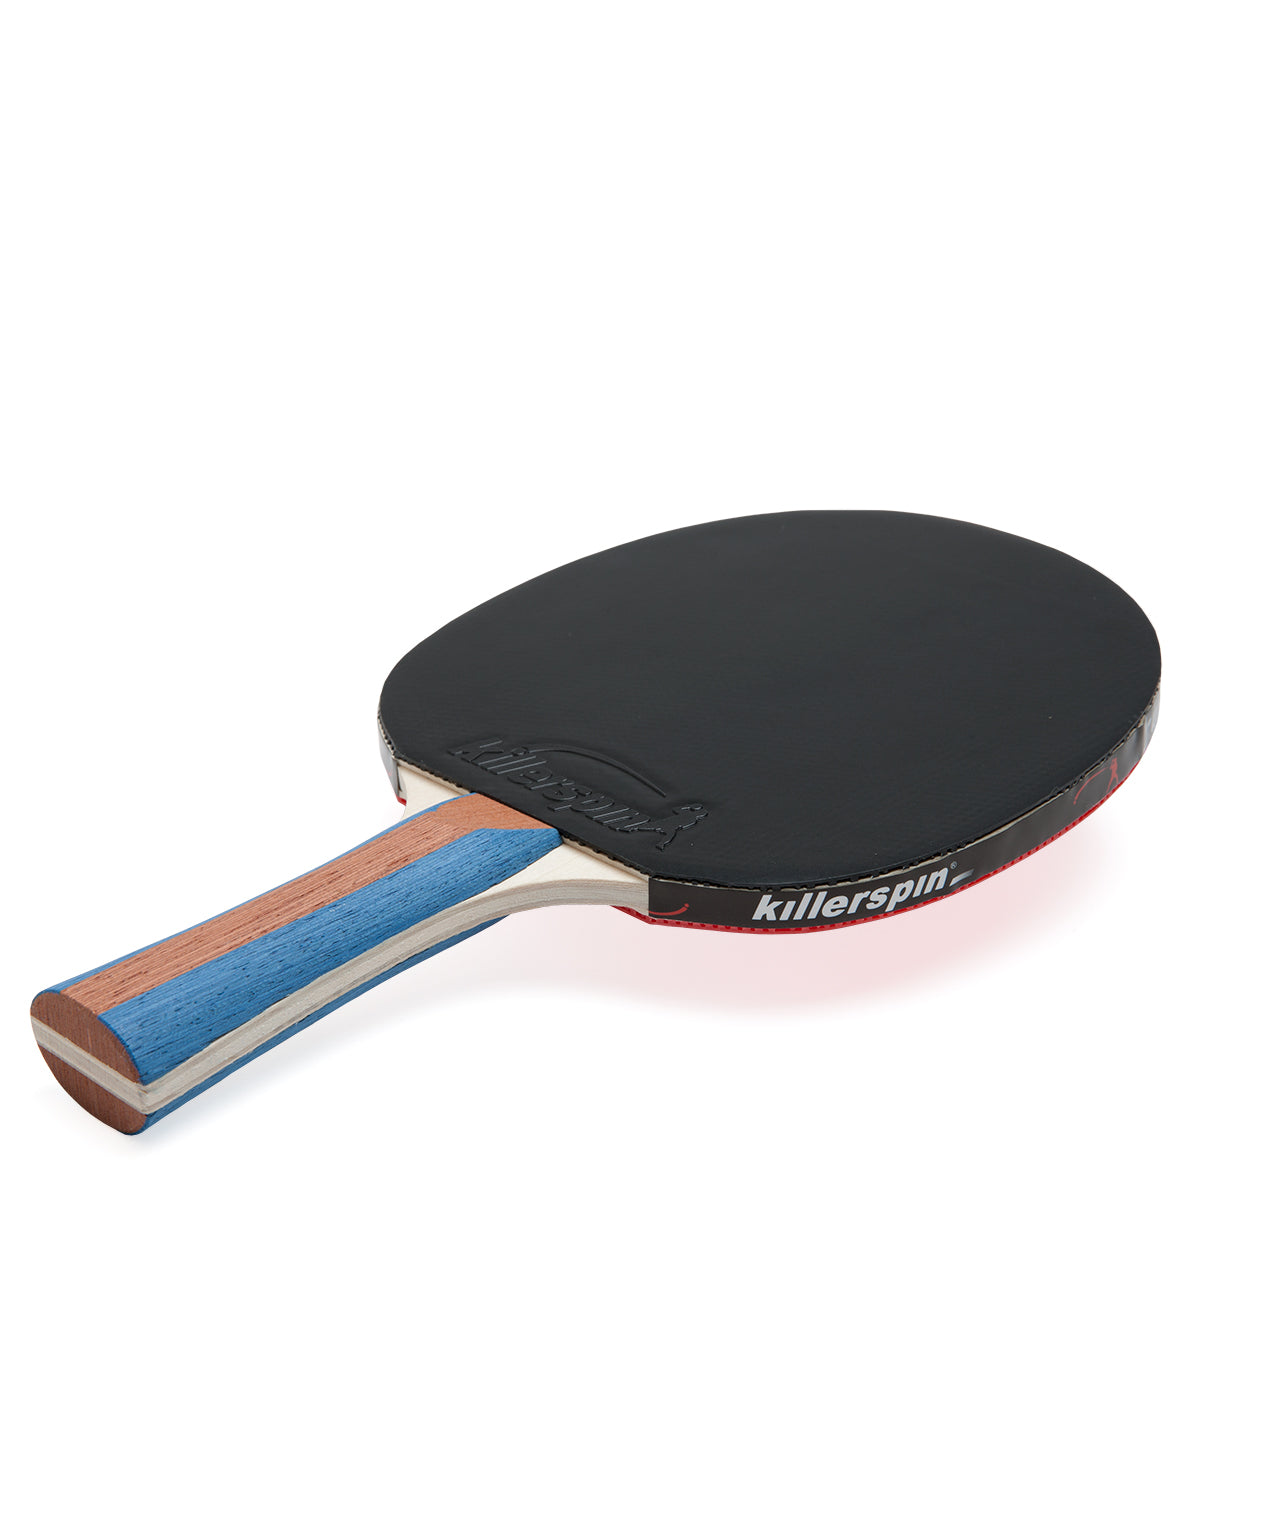 Ping-Pong® 4 Player Performance Set